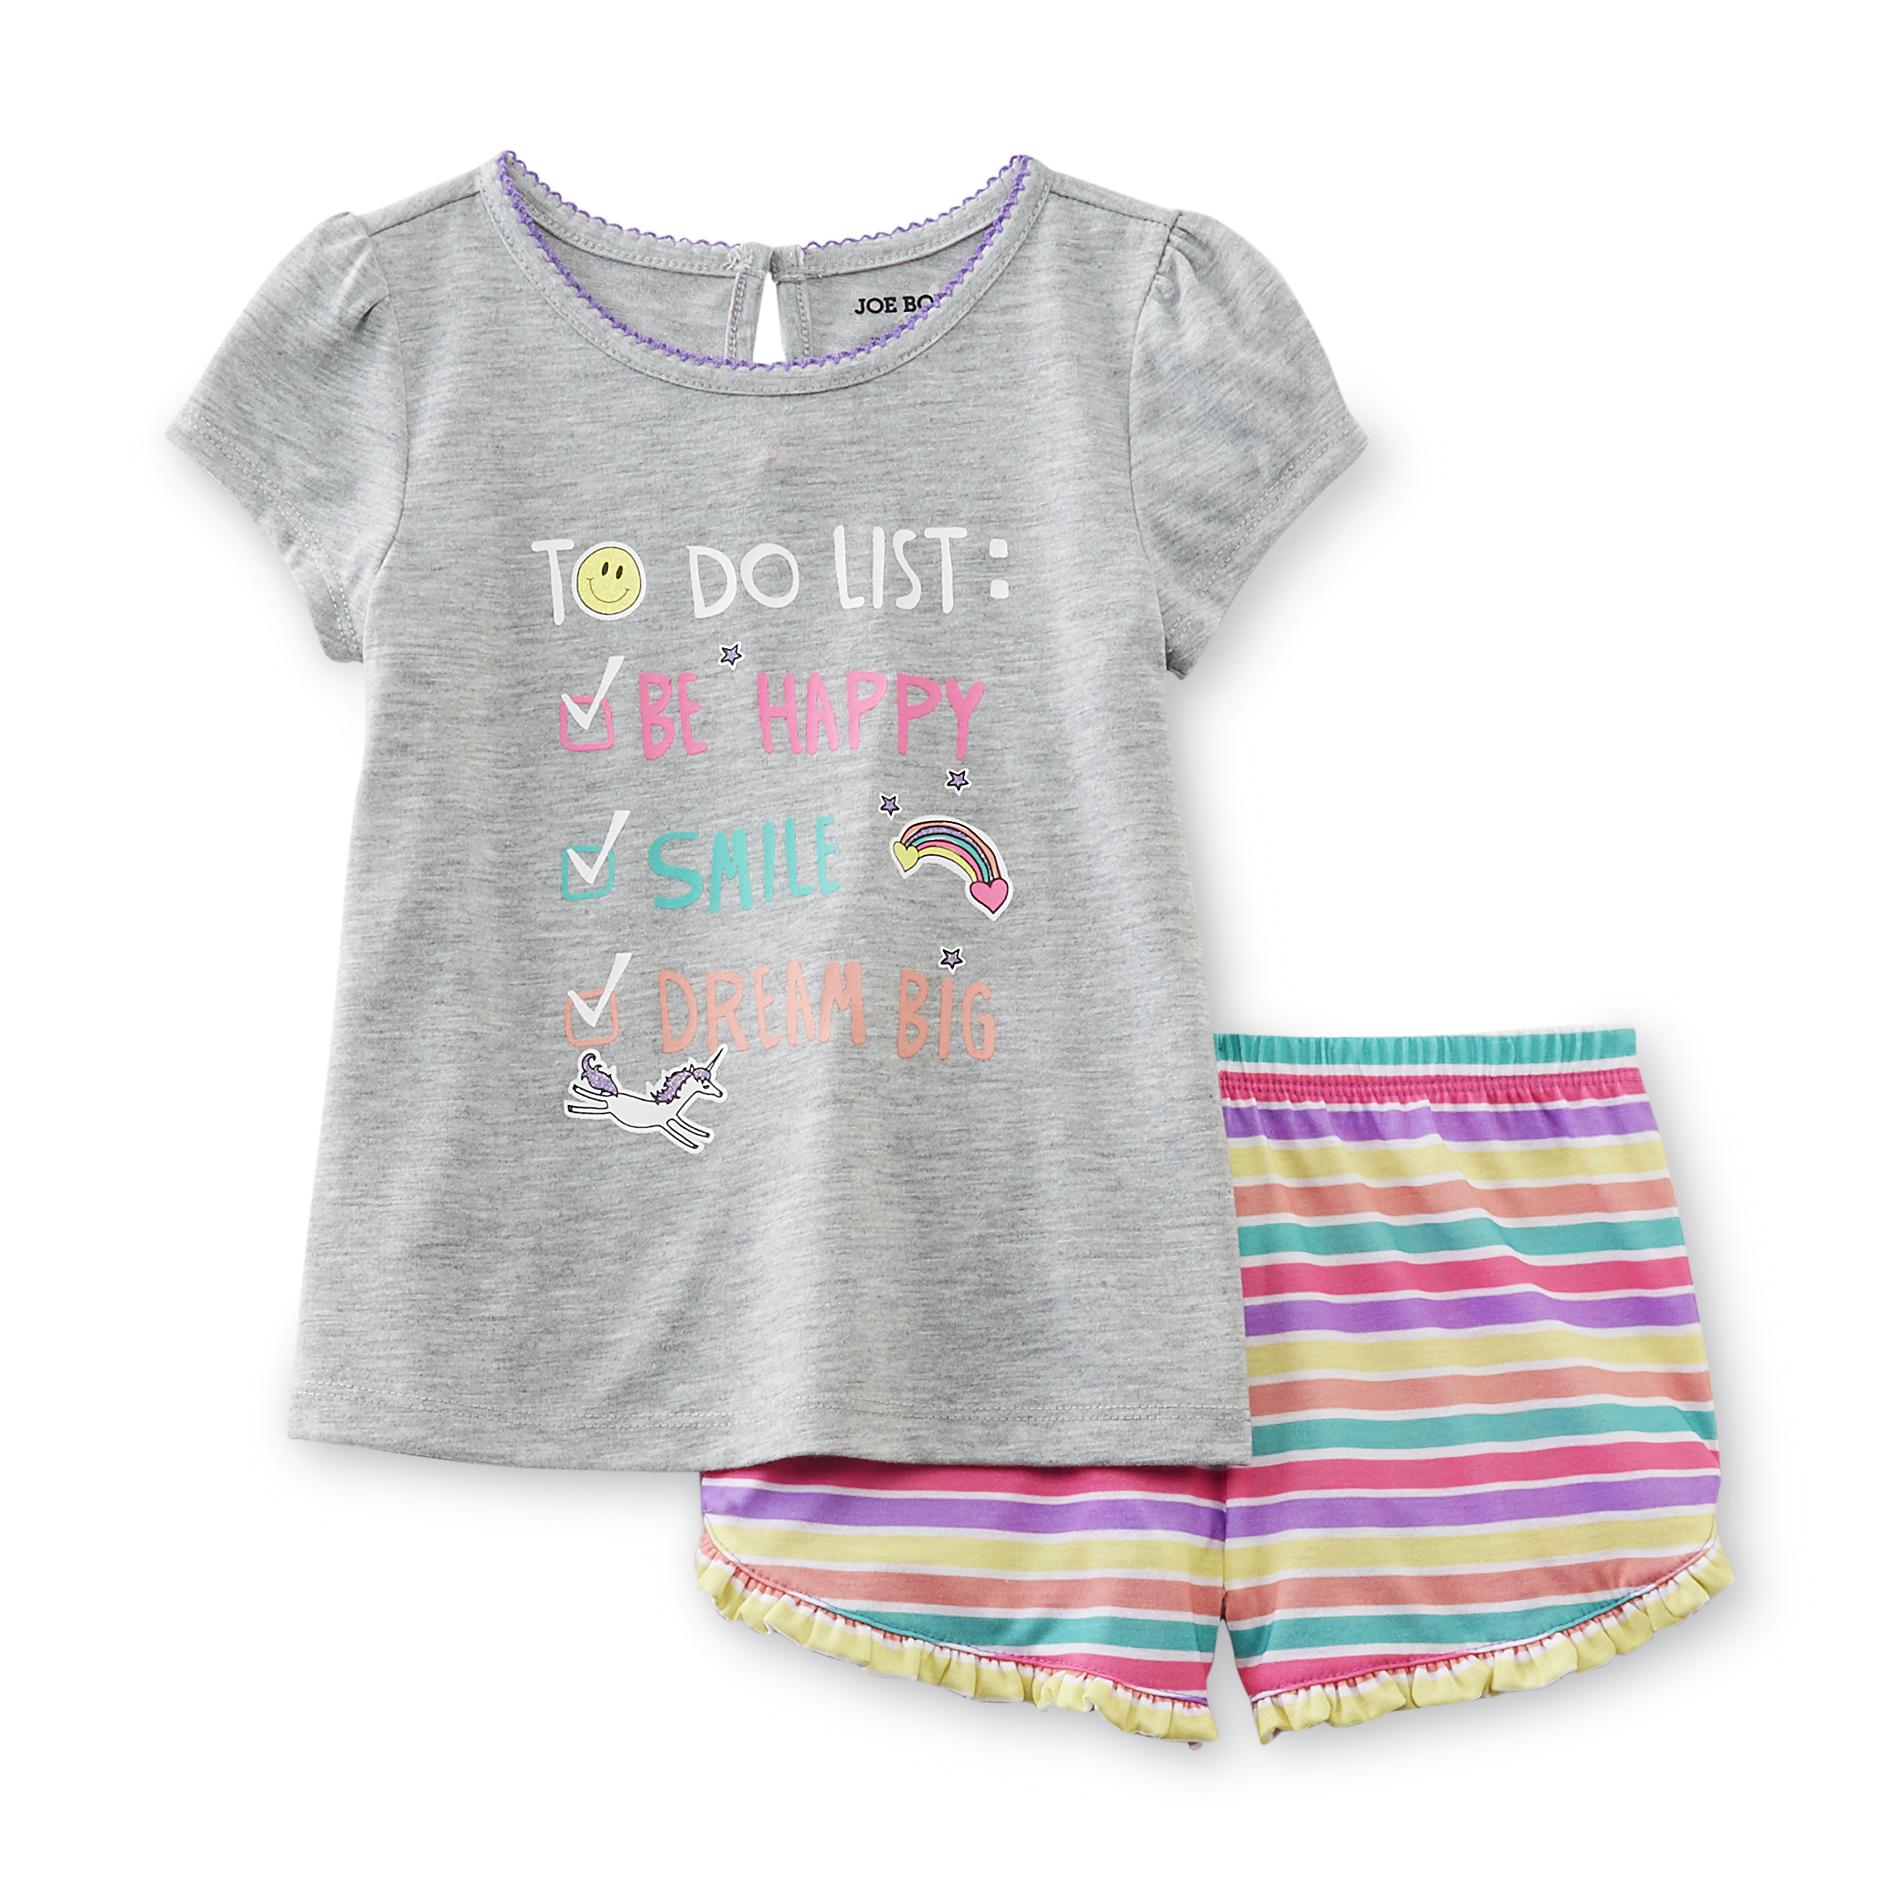 Joe Boxer Infant & Toddler Girl's Pajama Top & Shorts - Dream Big